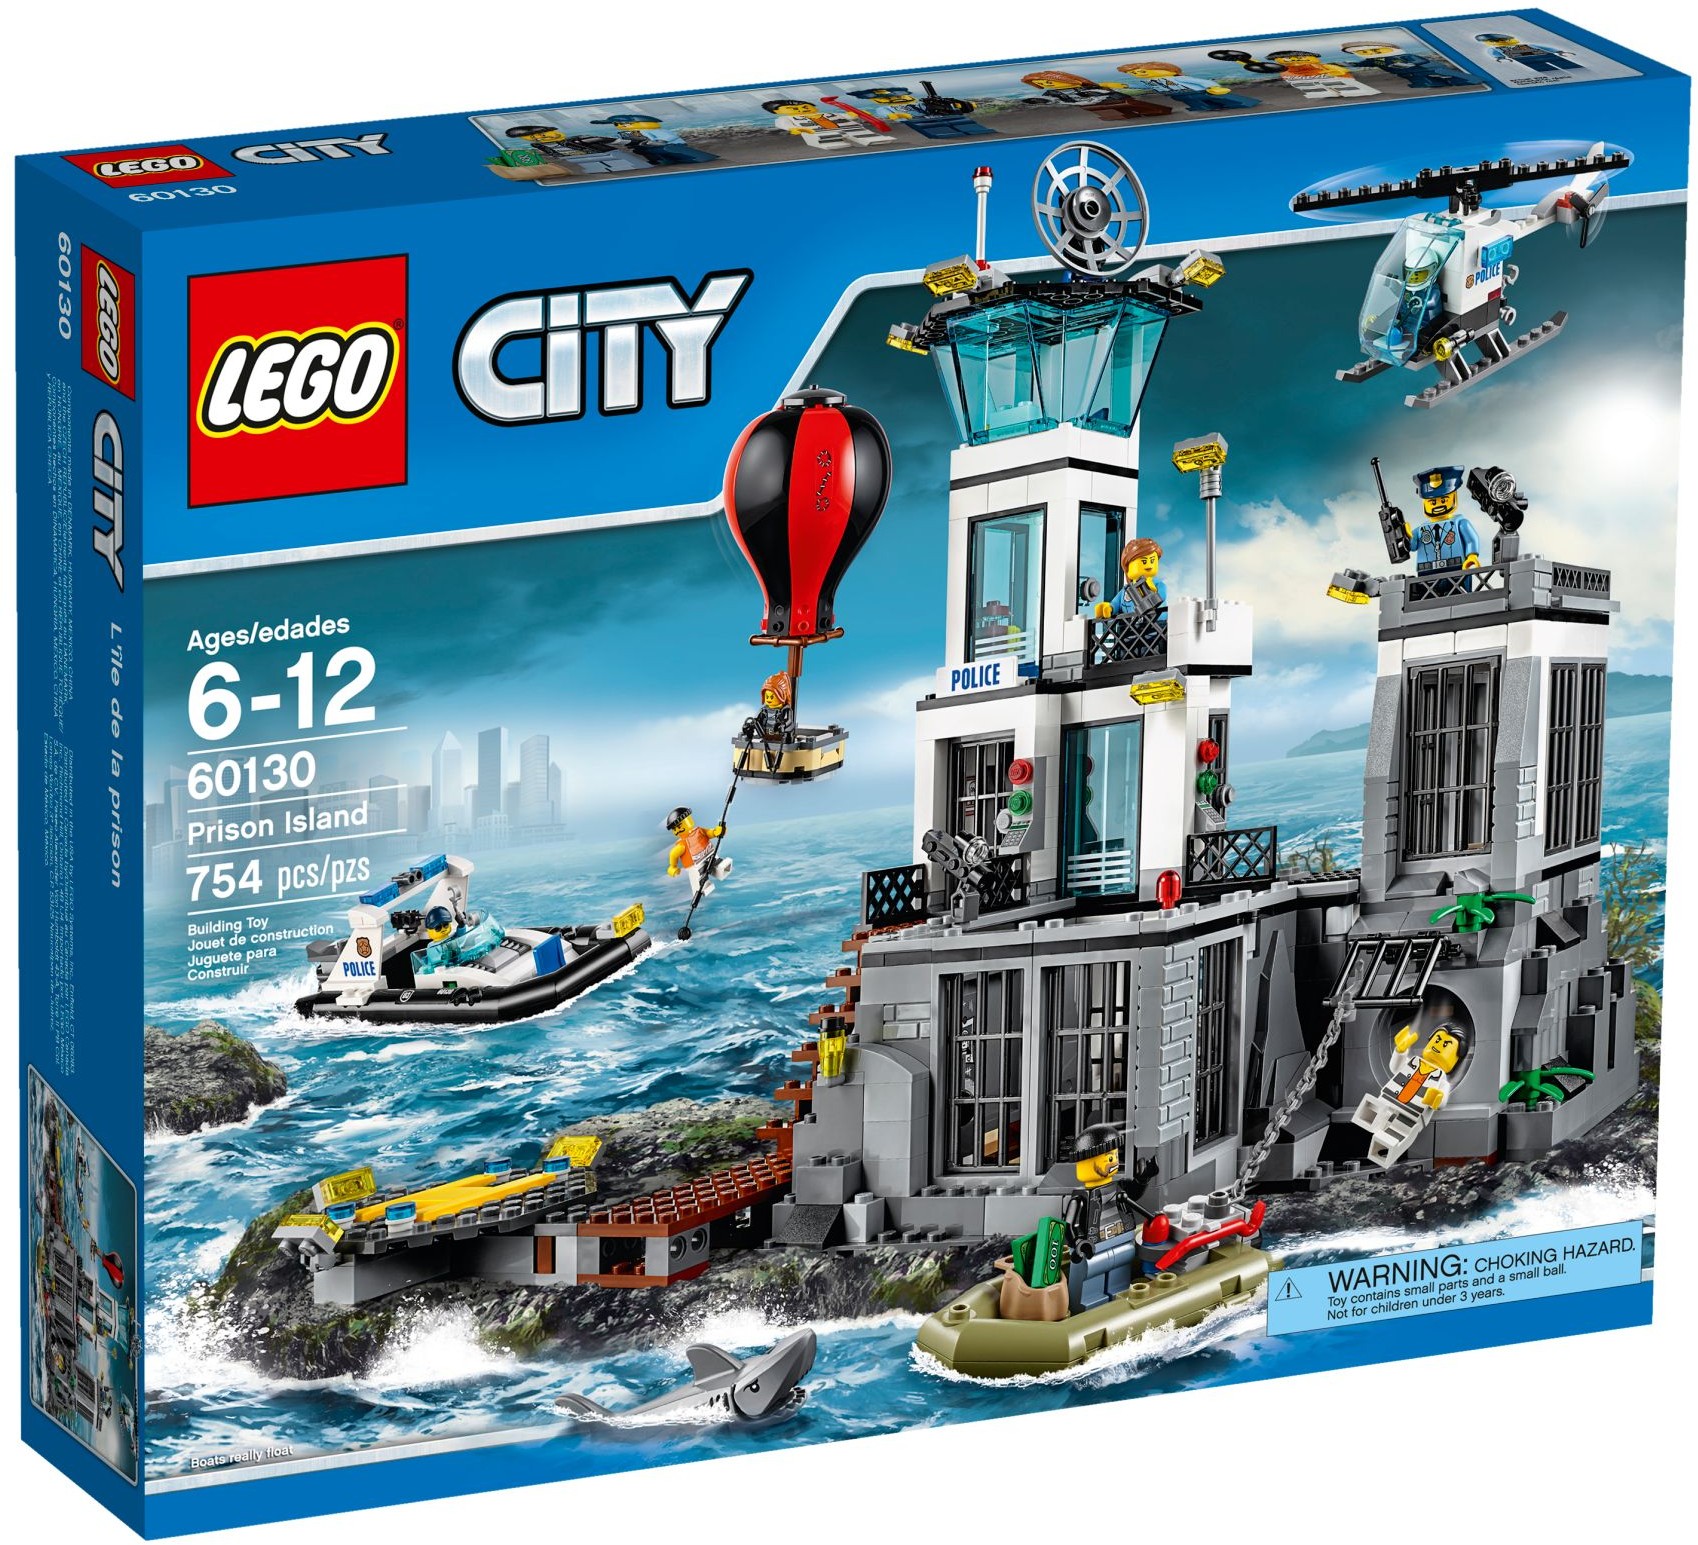 LEGO City 2016 Prison Island 60130 Set Photos Preview! Bricks and Bloks